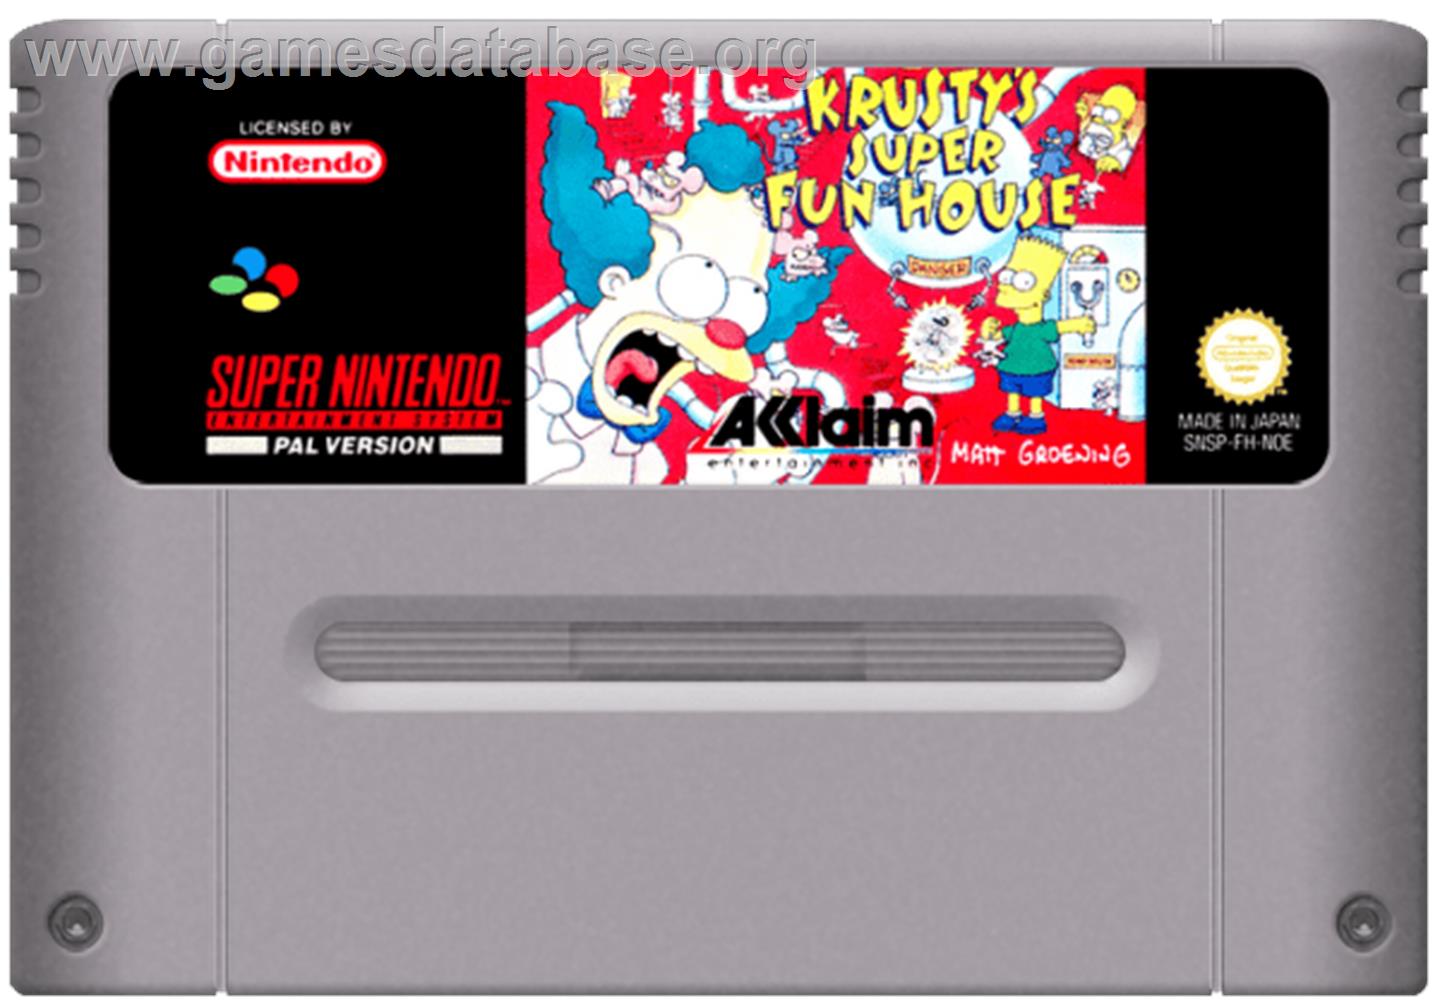 Krusty's Fun House - Nintendo SNES - Artwork - Cartridge